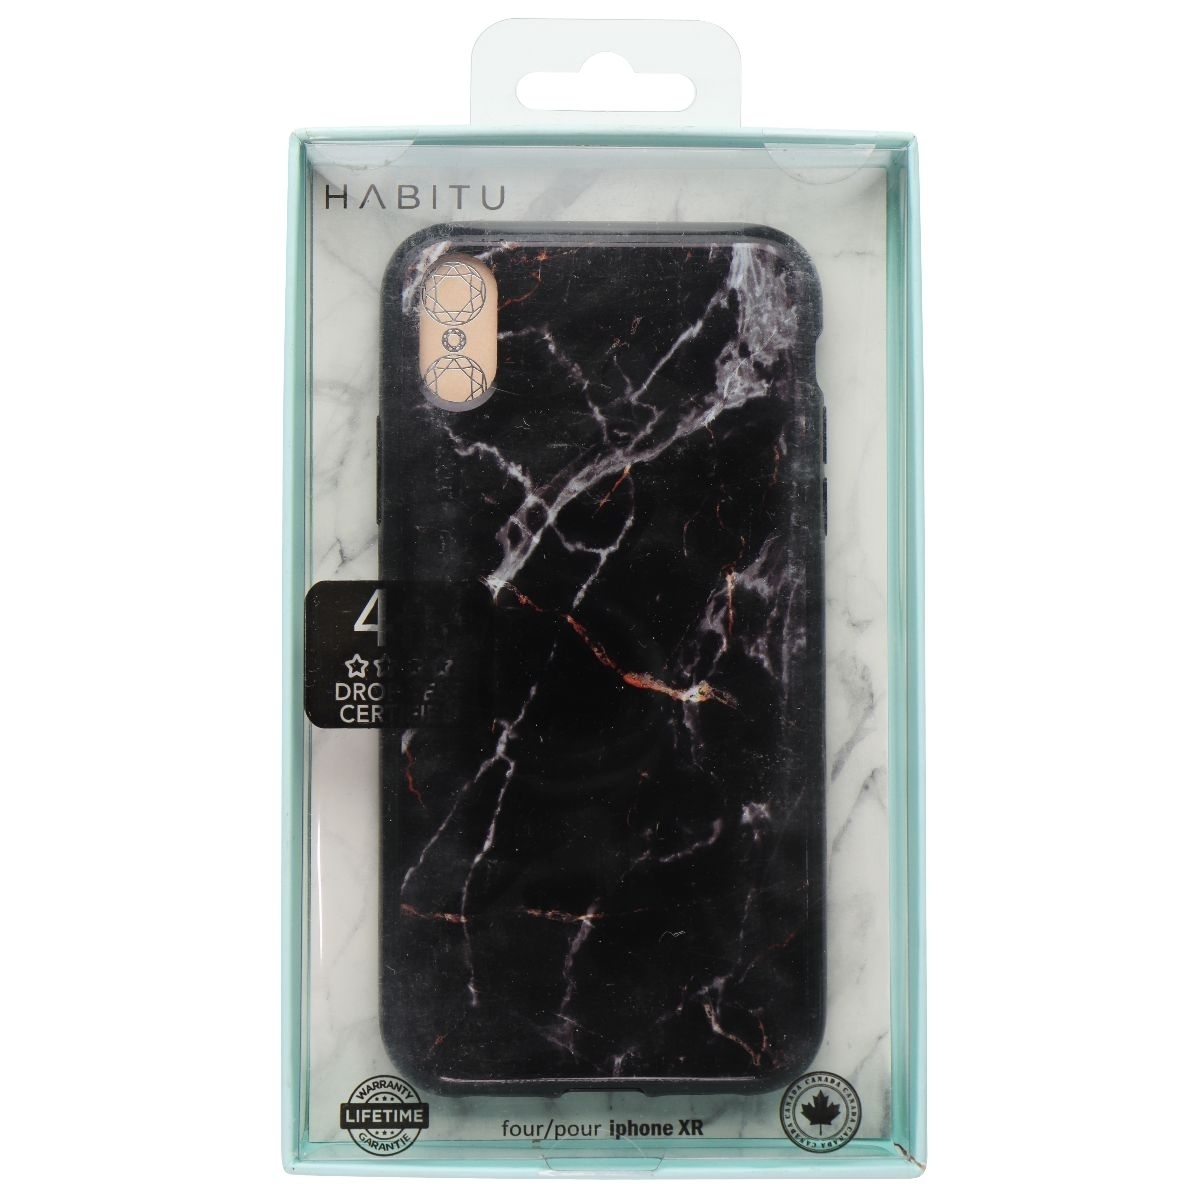 HABITU Slim Shell Case For Apple IPhone XR - Black Marble (Refurbished)